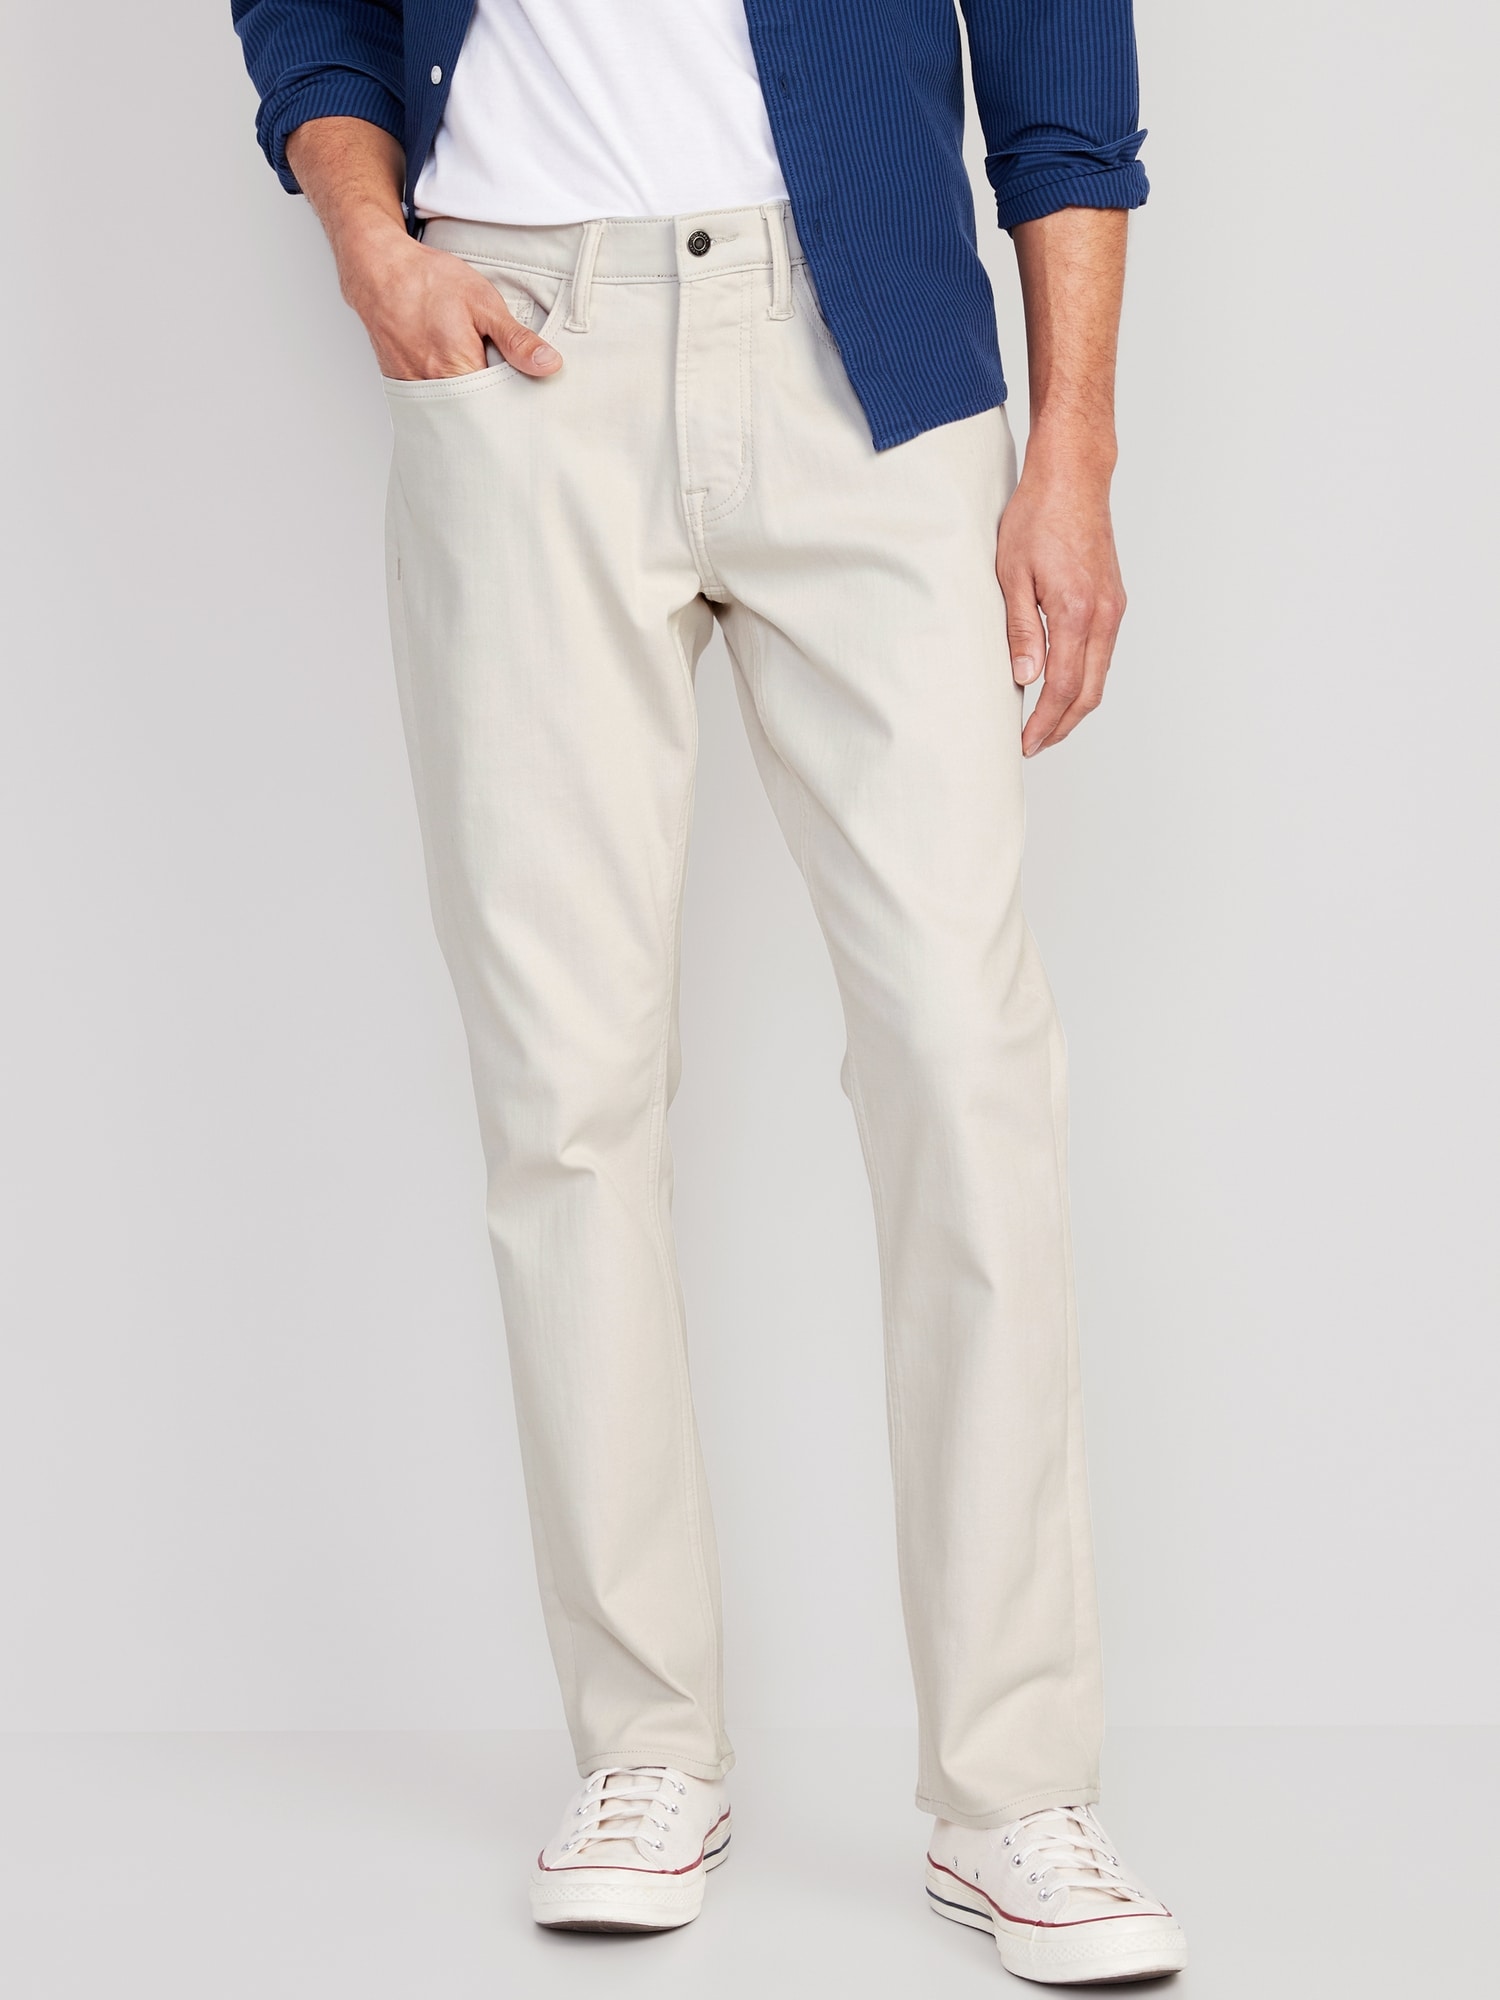 Buy Ylingjun Mens Baggy Hip Hop Jeans Casual Loose Fit Skateboard Denim  Pants, White 108, 30 at Amazon.in